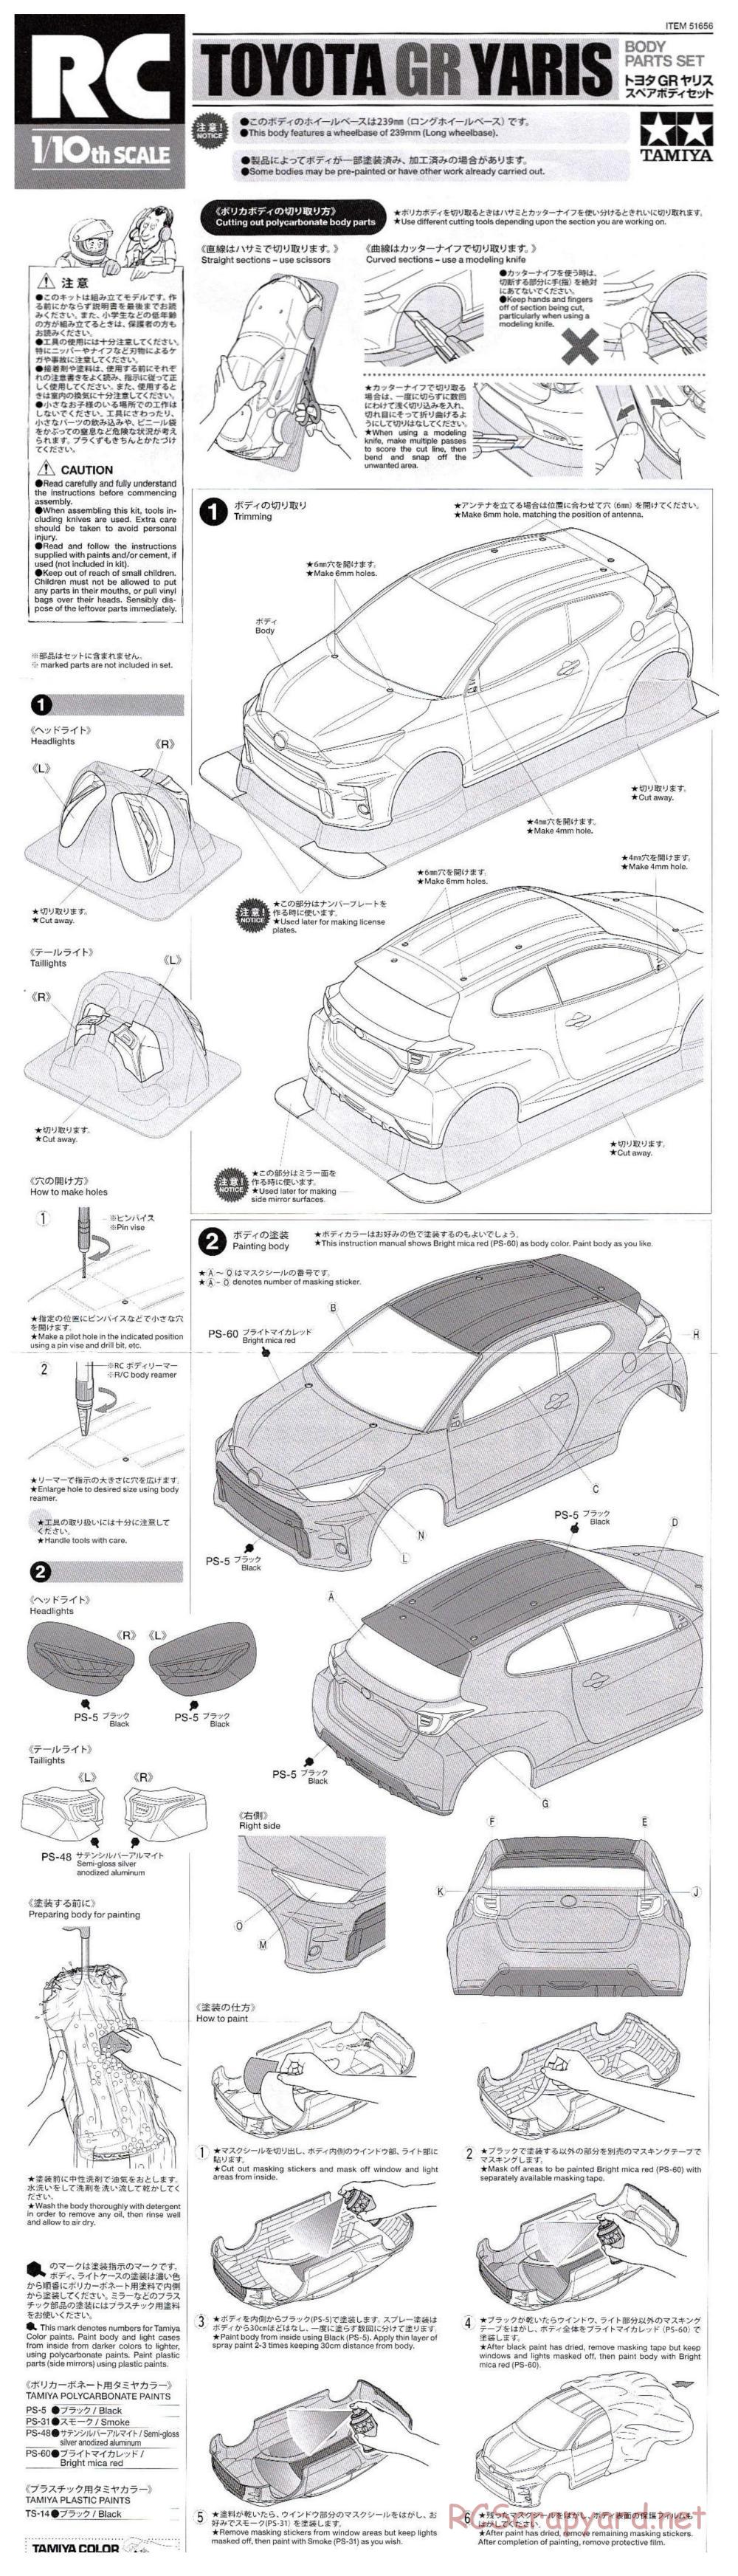 Tamiya - Toyota GR Yaris - M-05 Chassis - Body Manual - Page 1